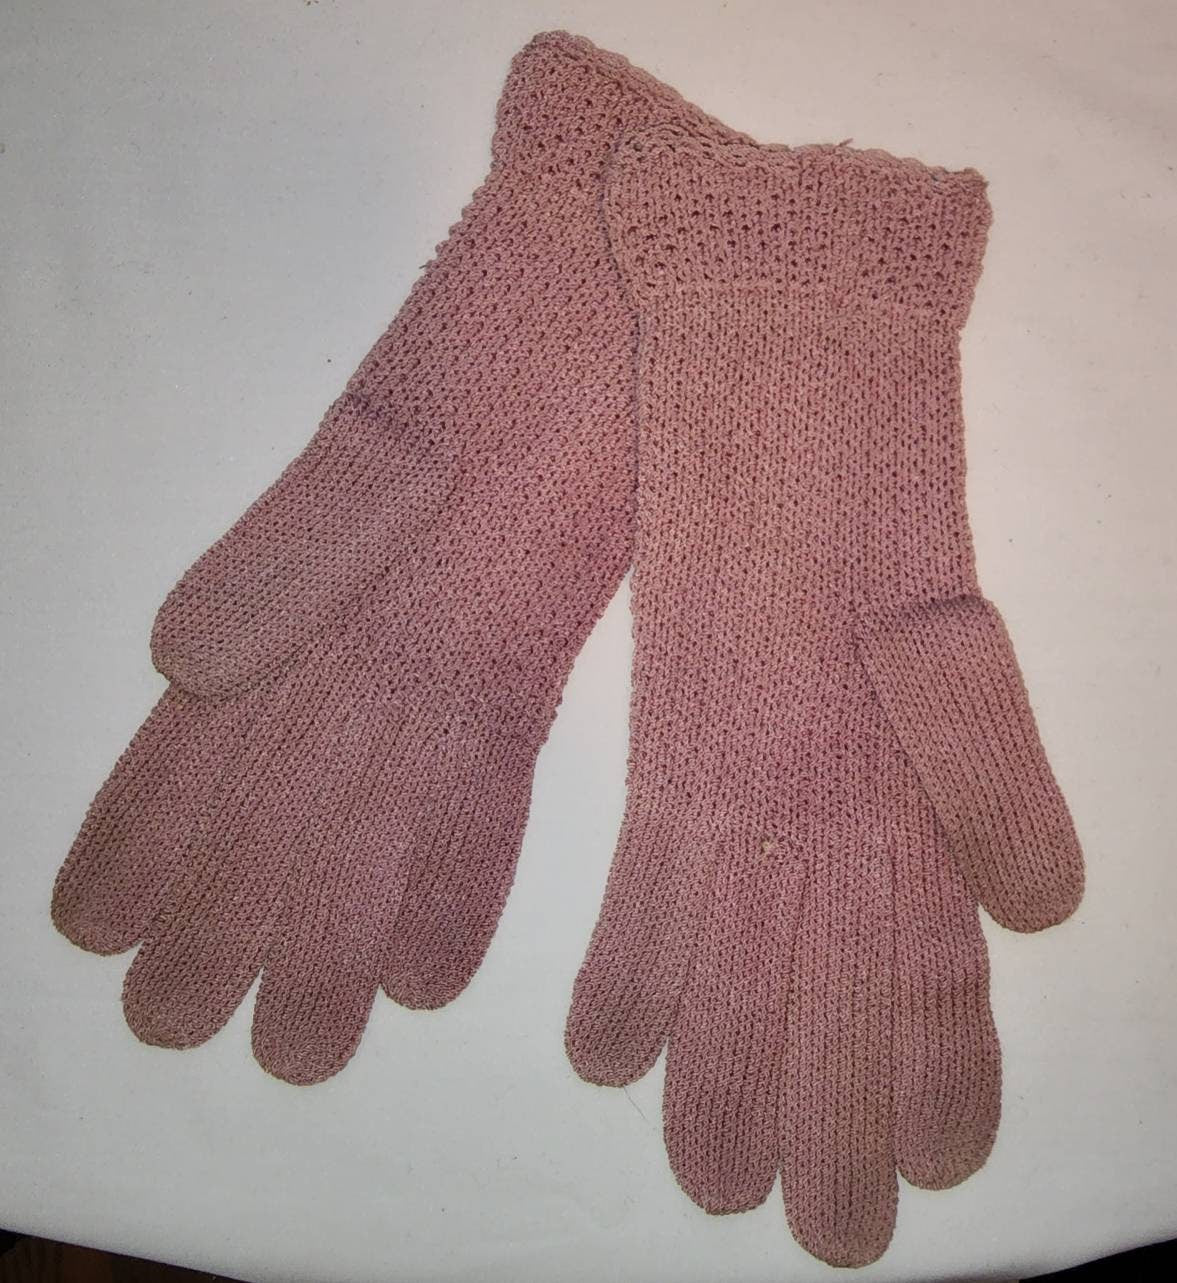 Vintage Knit Gloves 1930s 40s Mauve Pink Patterned Knit Winter Gloves Art Deco Rockabilly